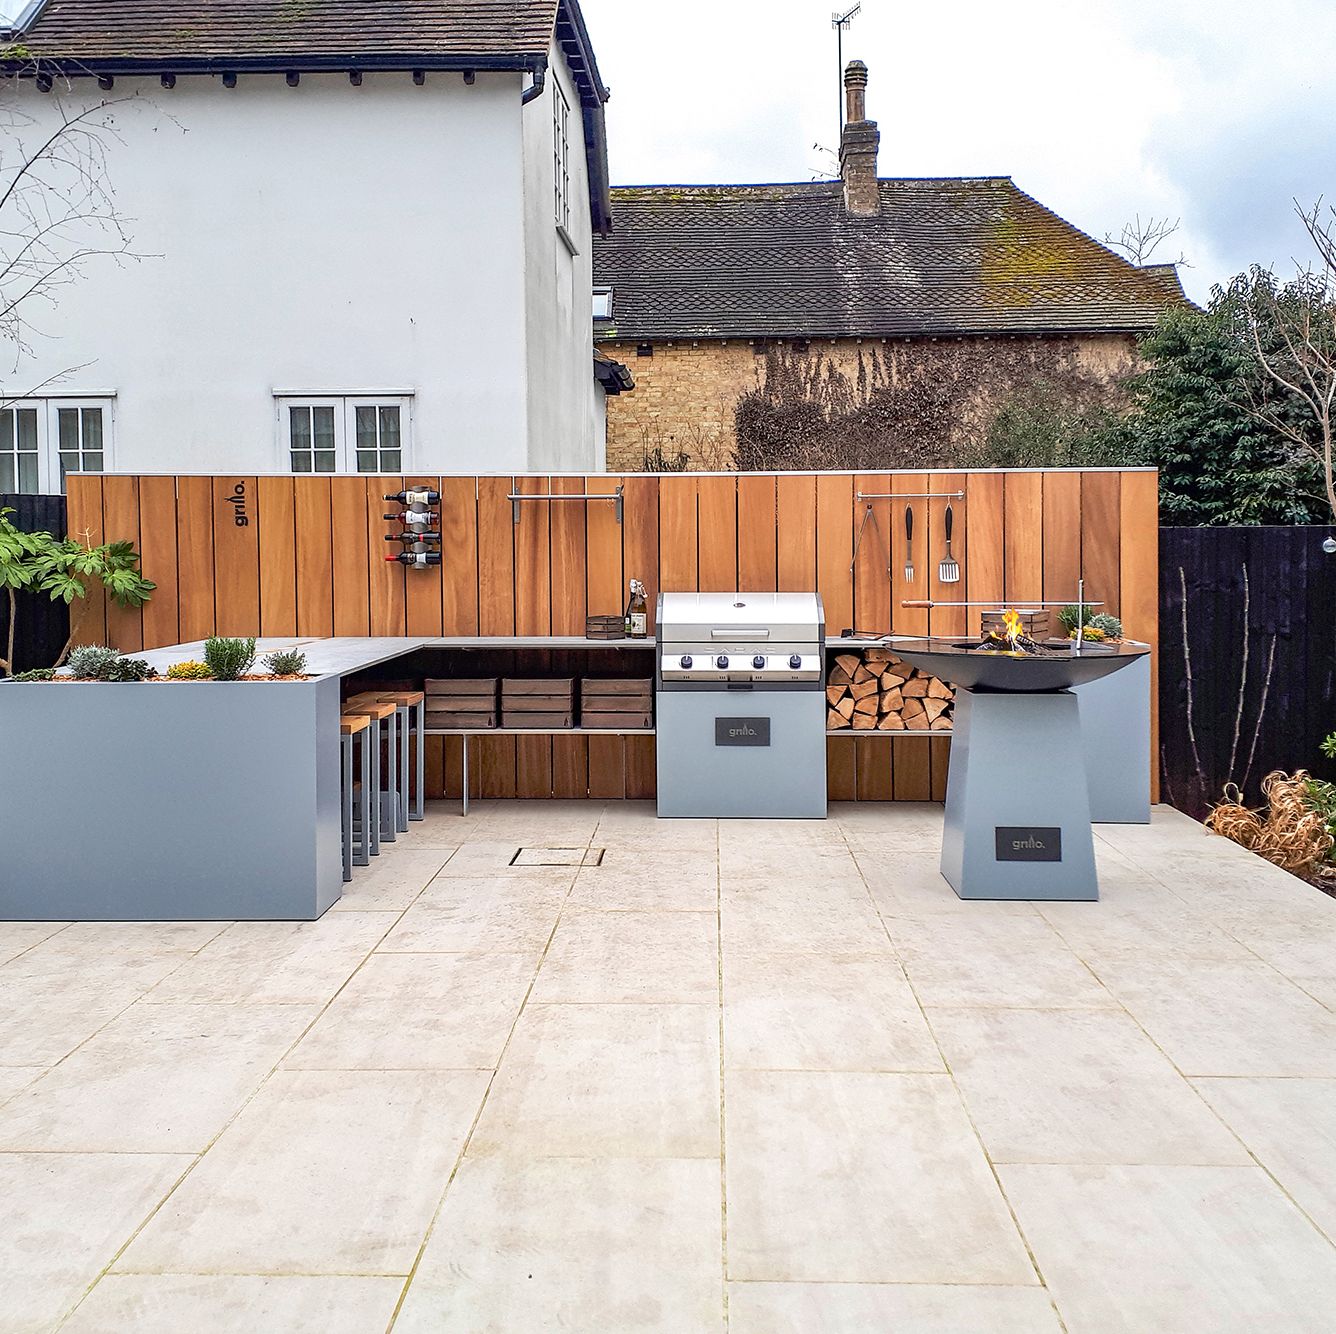 simple outdoor kitchen design ideas